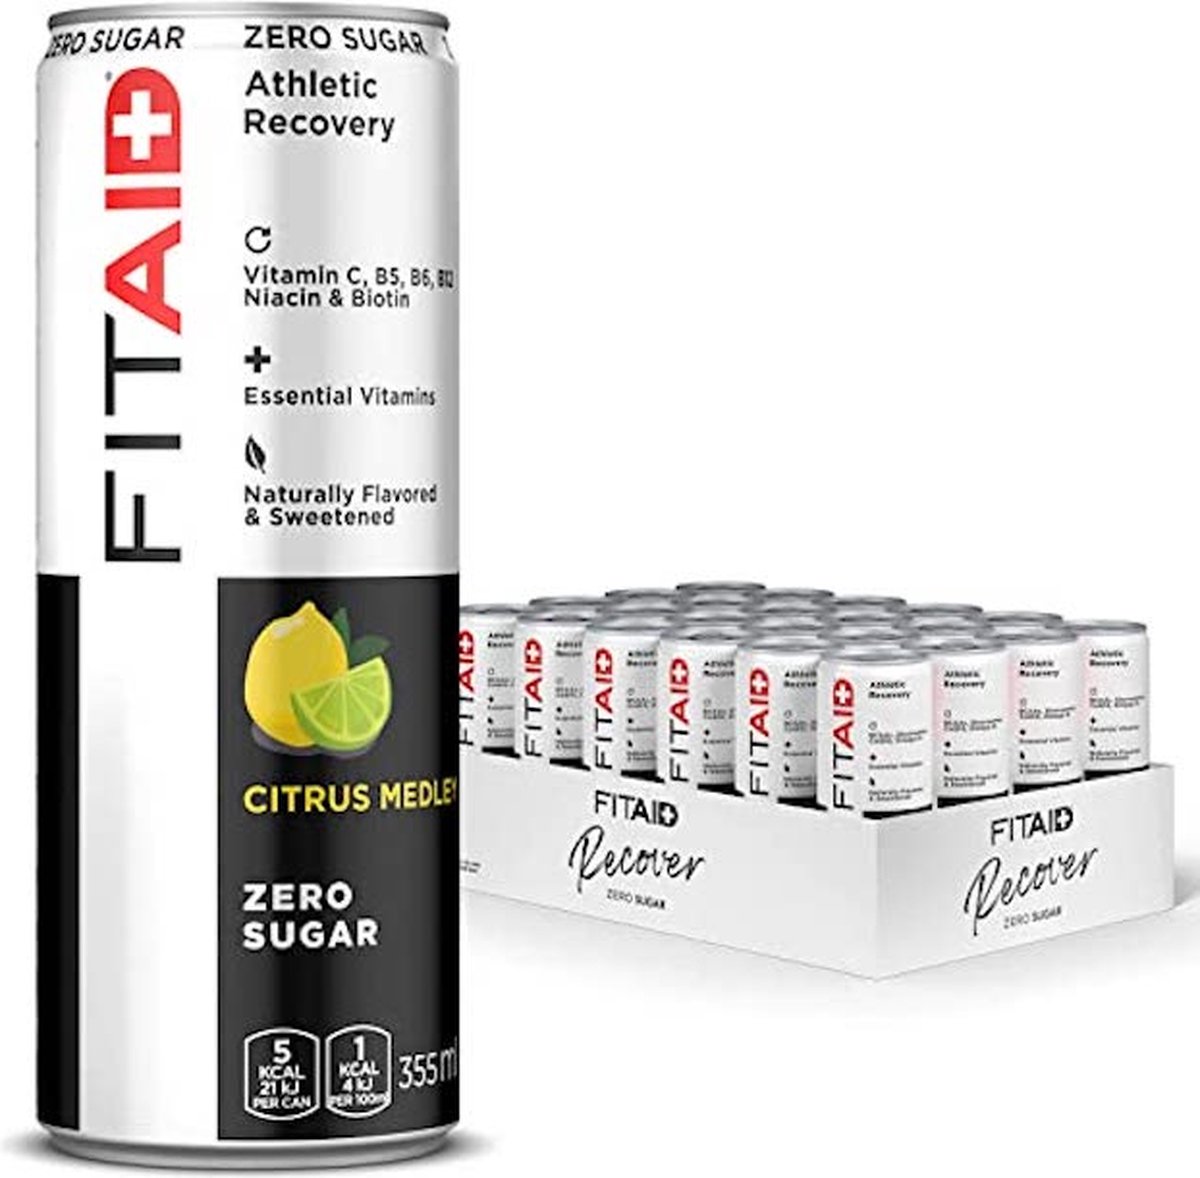 LIFEAID - FITAID - Recover - Zero Sugar - 24 x 355ML - Citrus Smaak